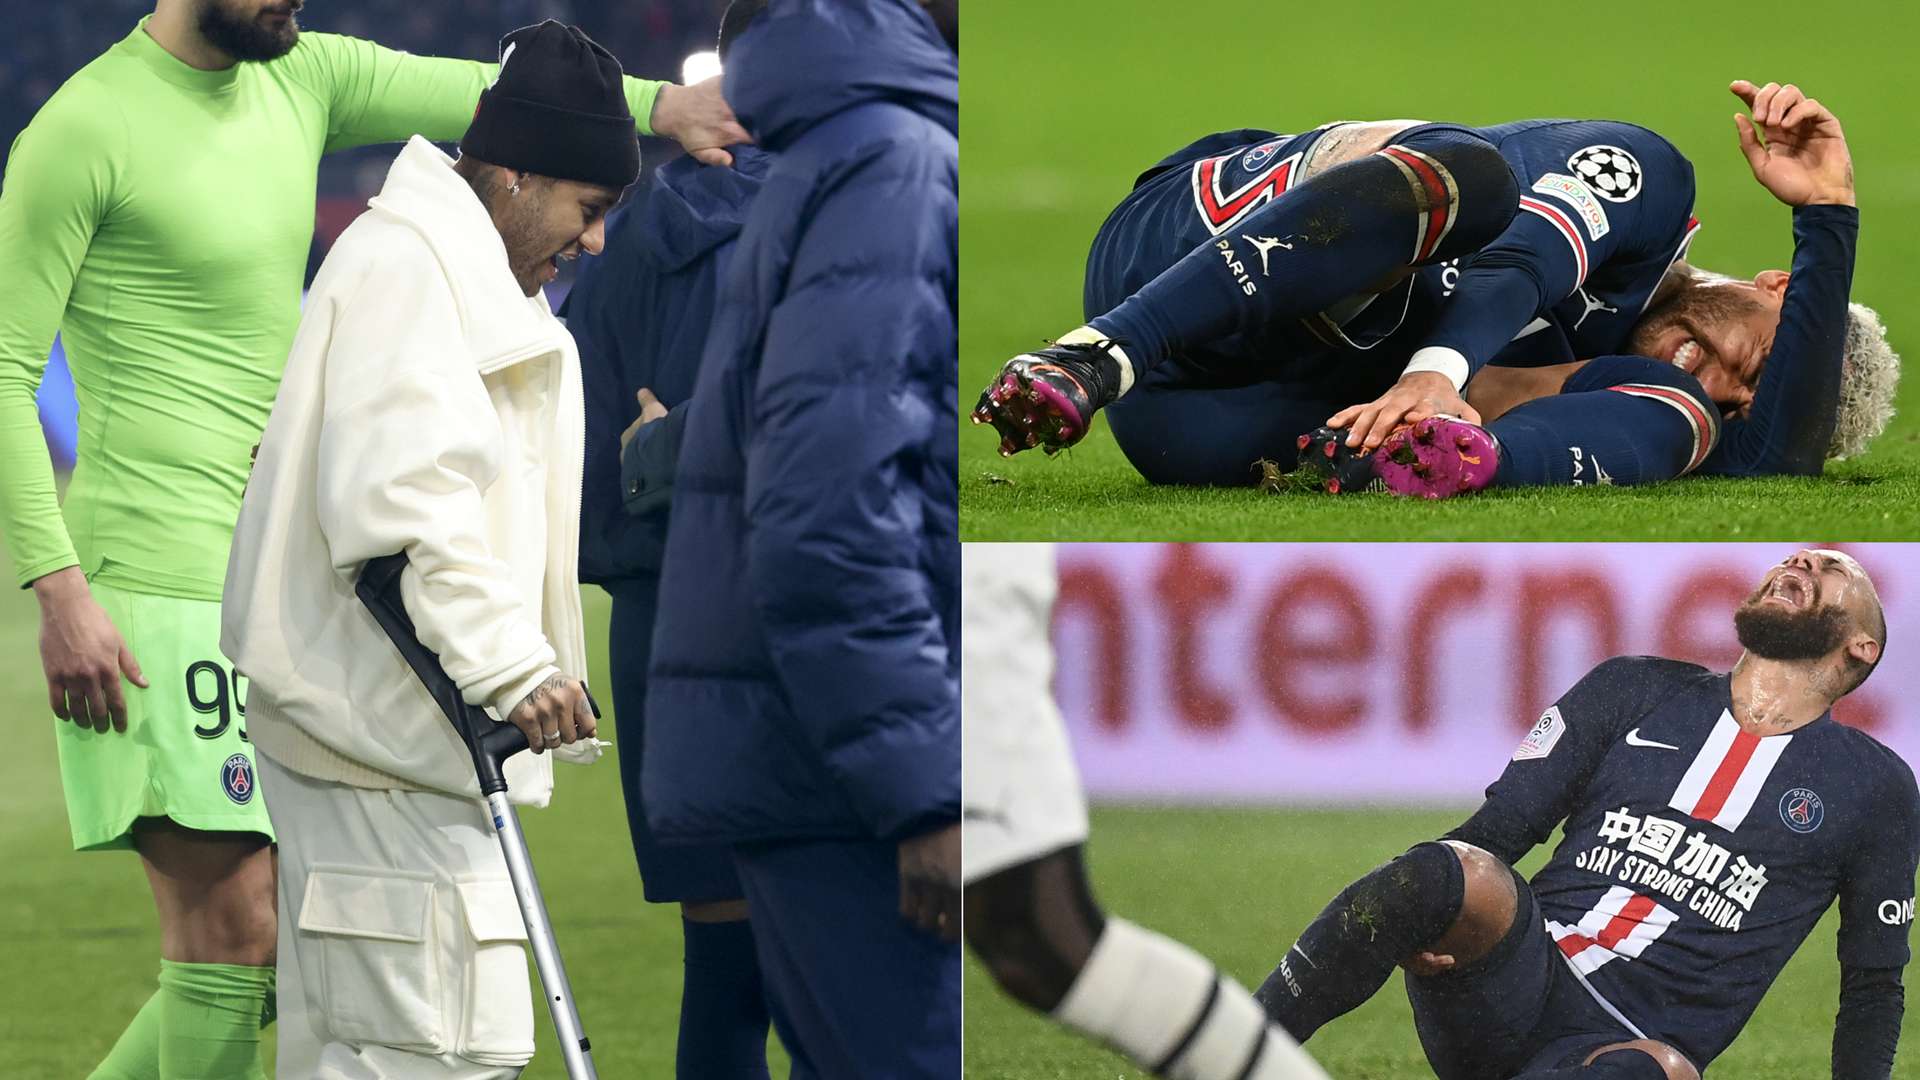 Neymar injures